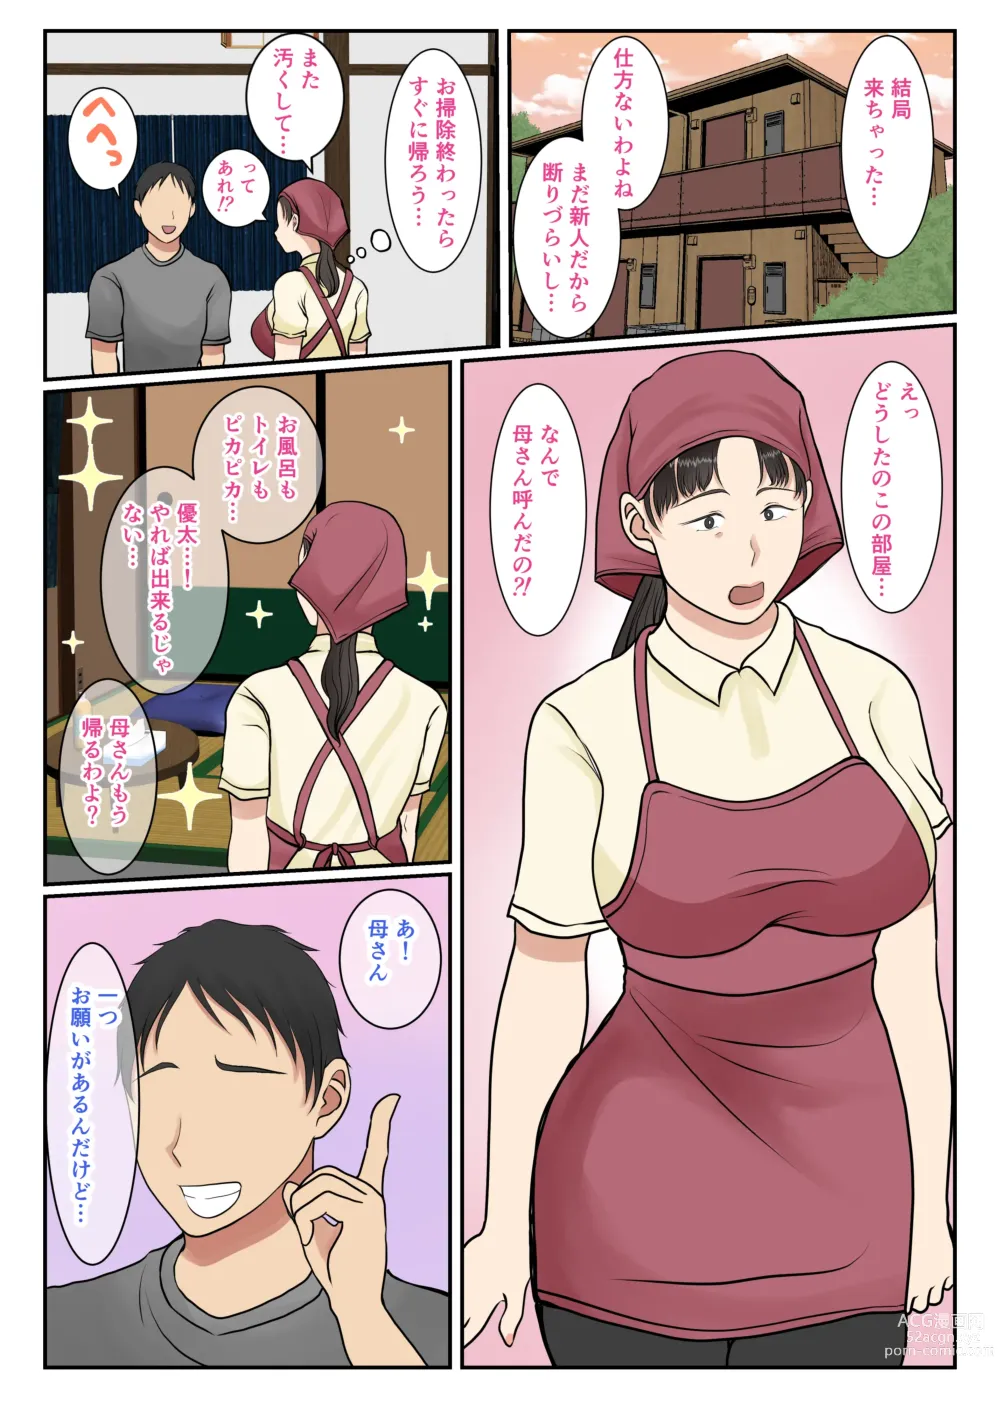 Page 26 of doujinshi Kaseifu Yondara Haha ga Kita